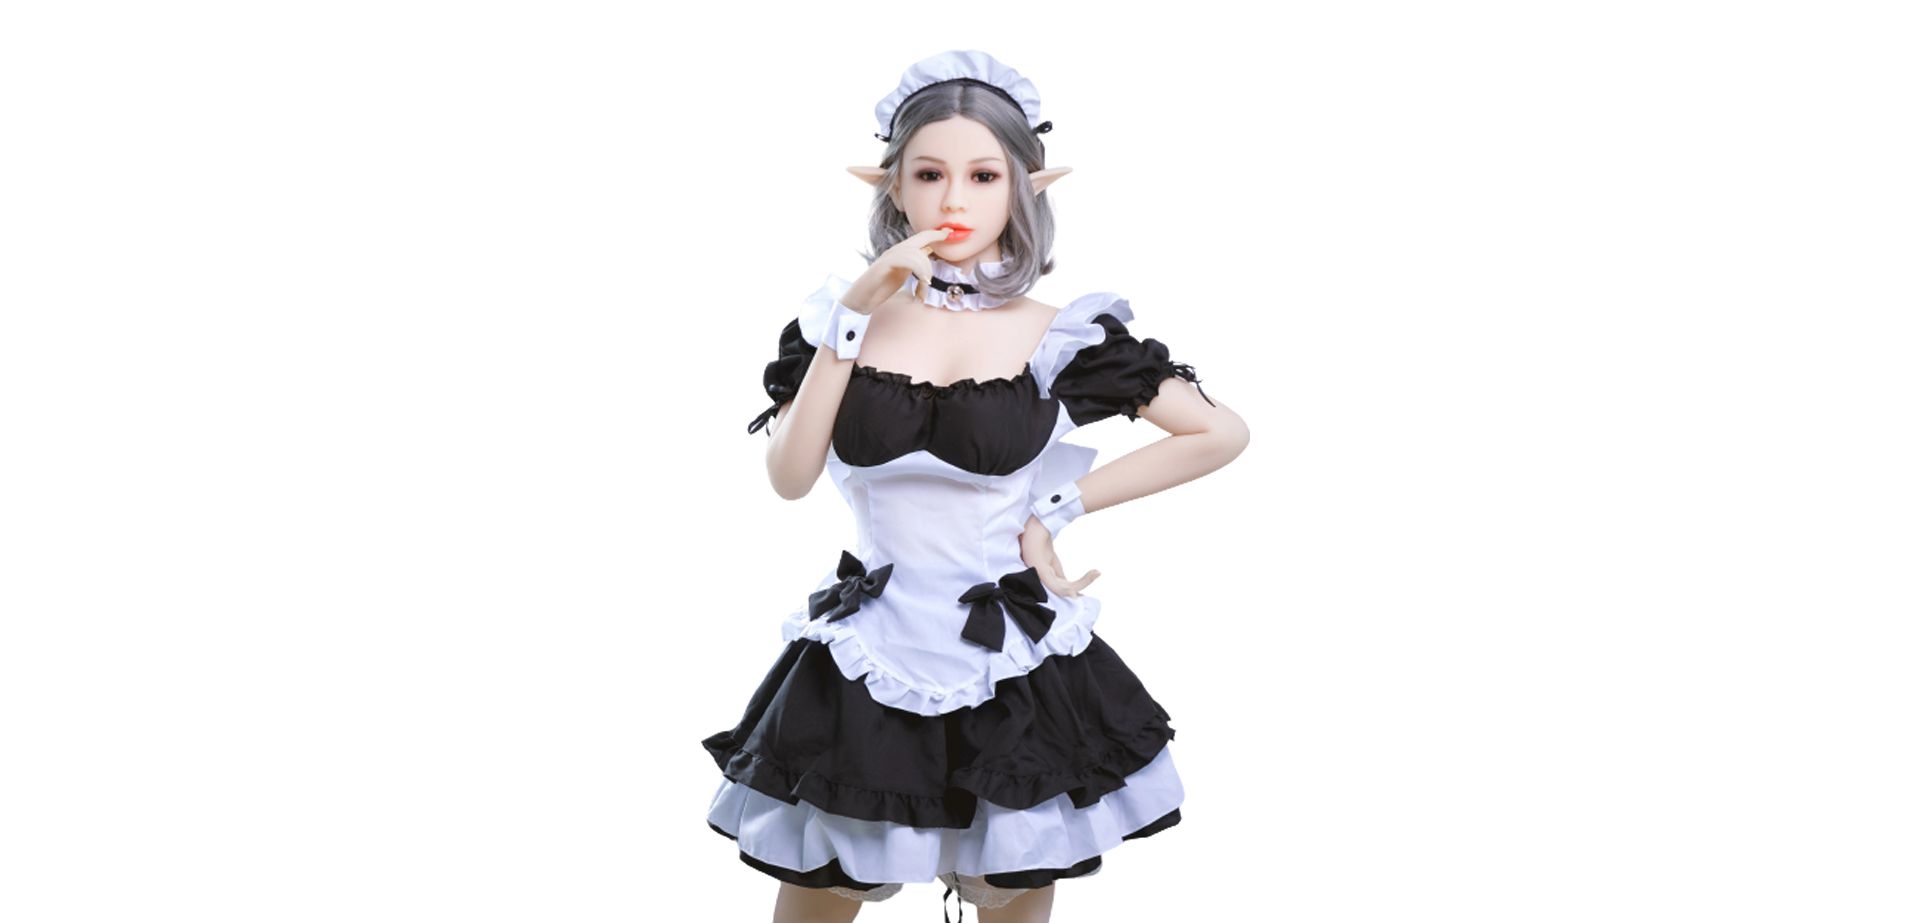 Alien sex doll in maid costume.